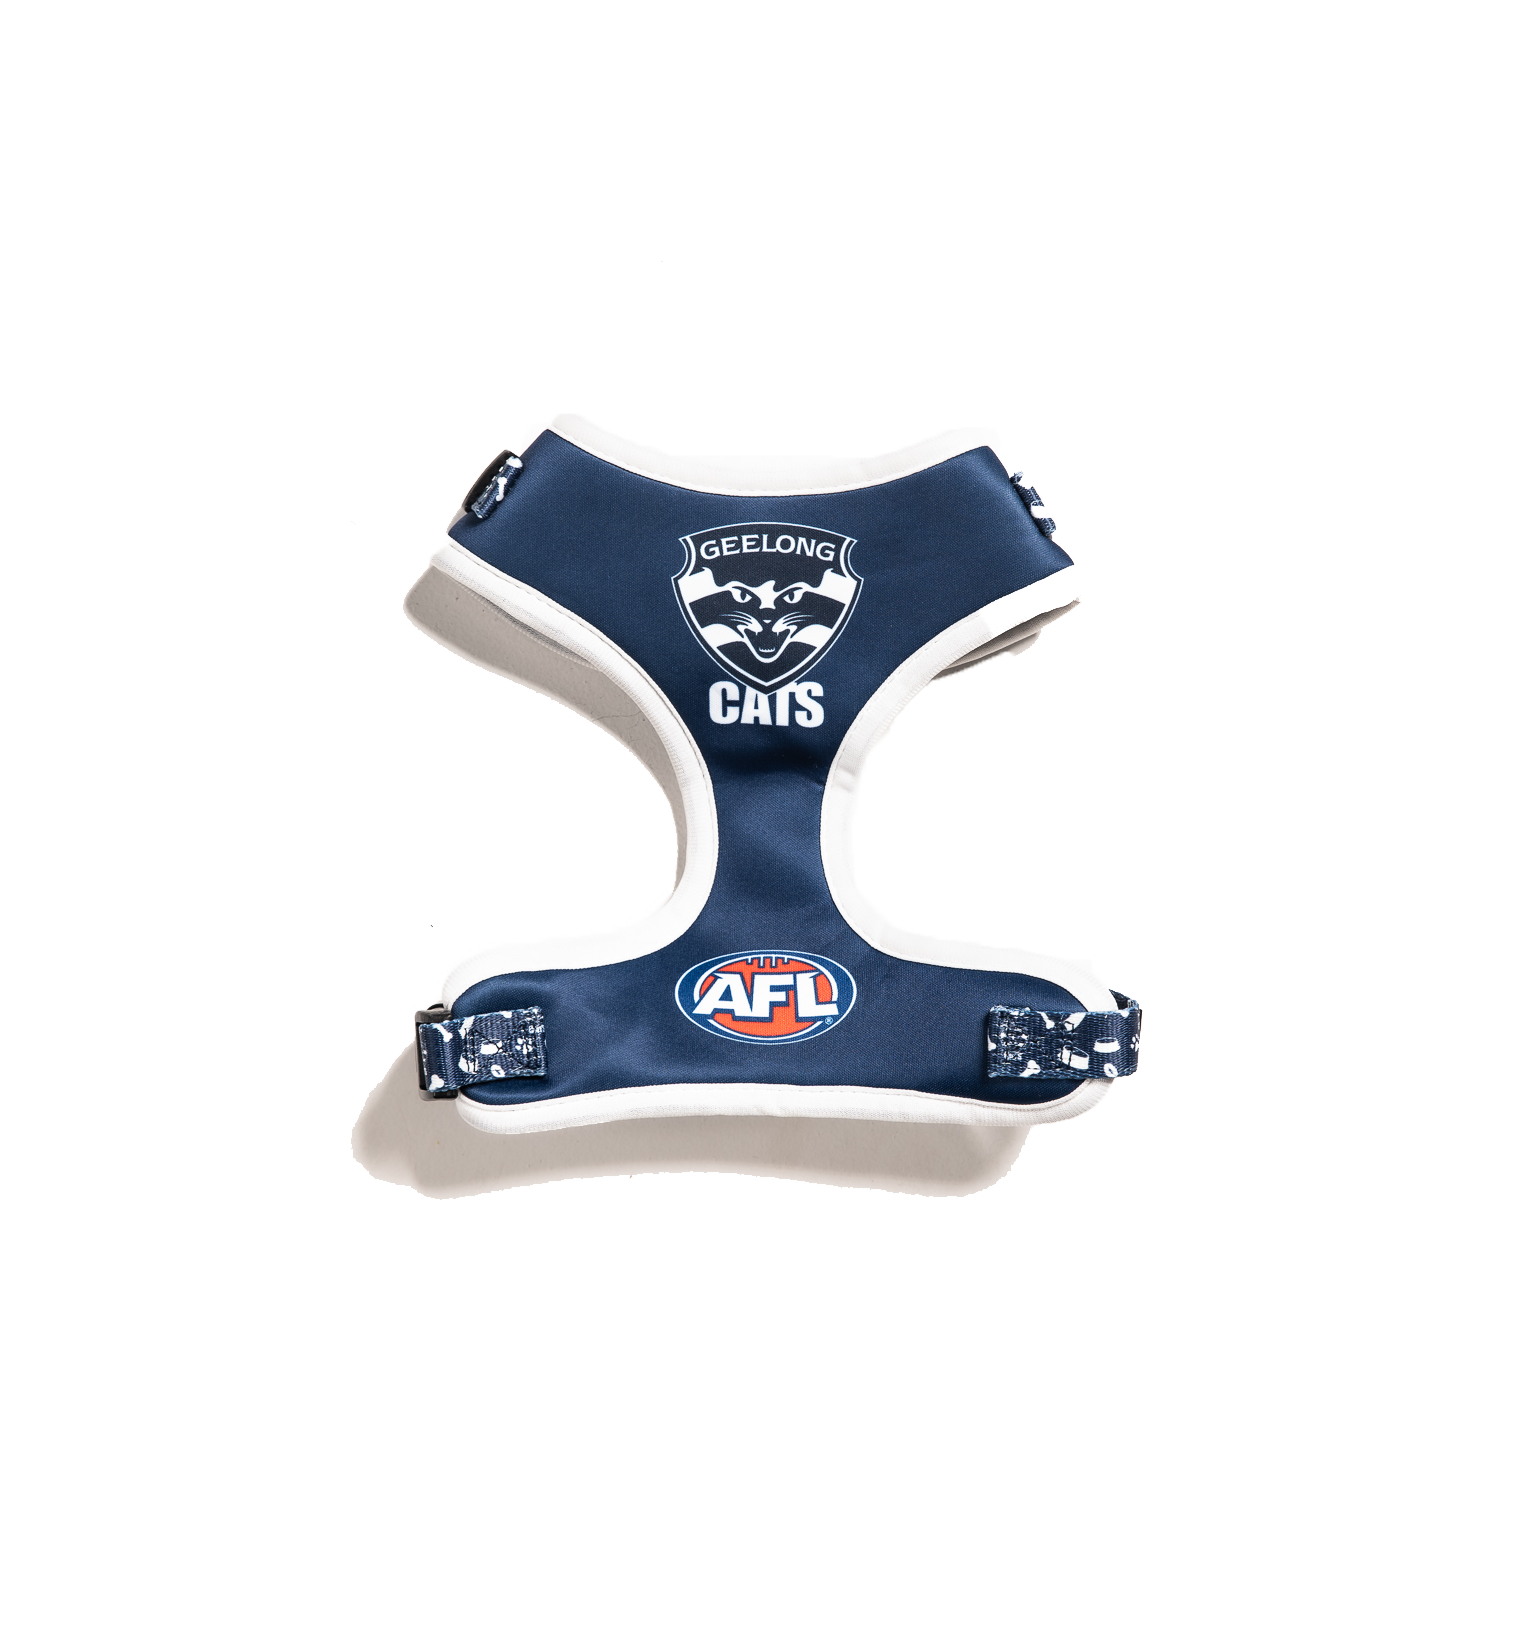 Geelong Cats AFL Dog Harness XS-XL